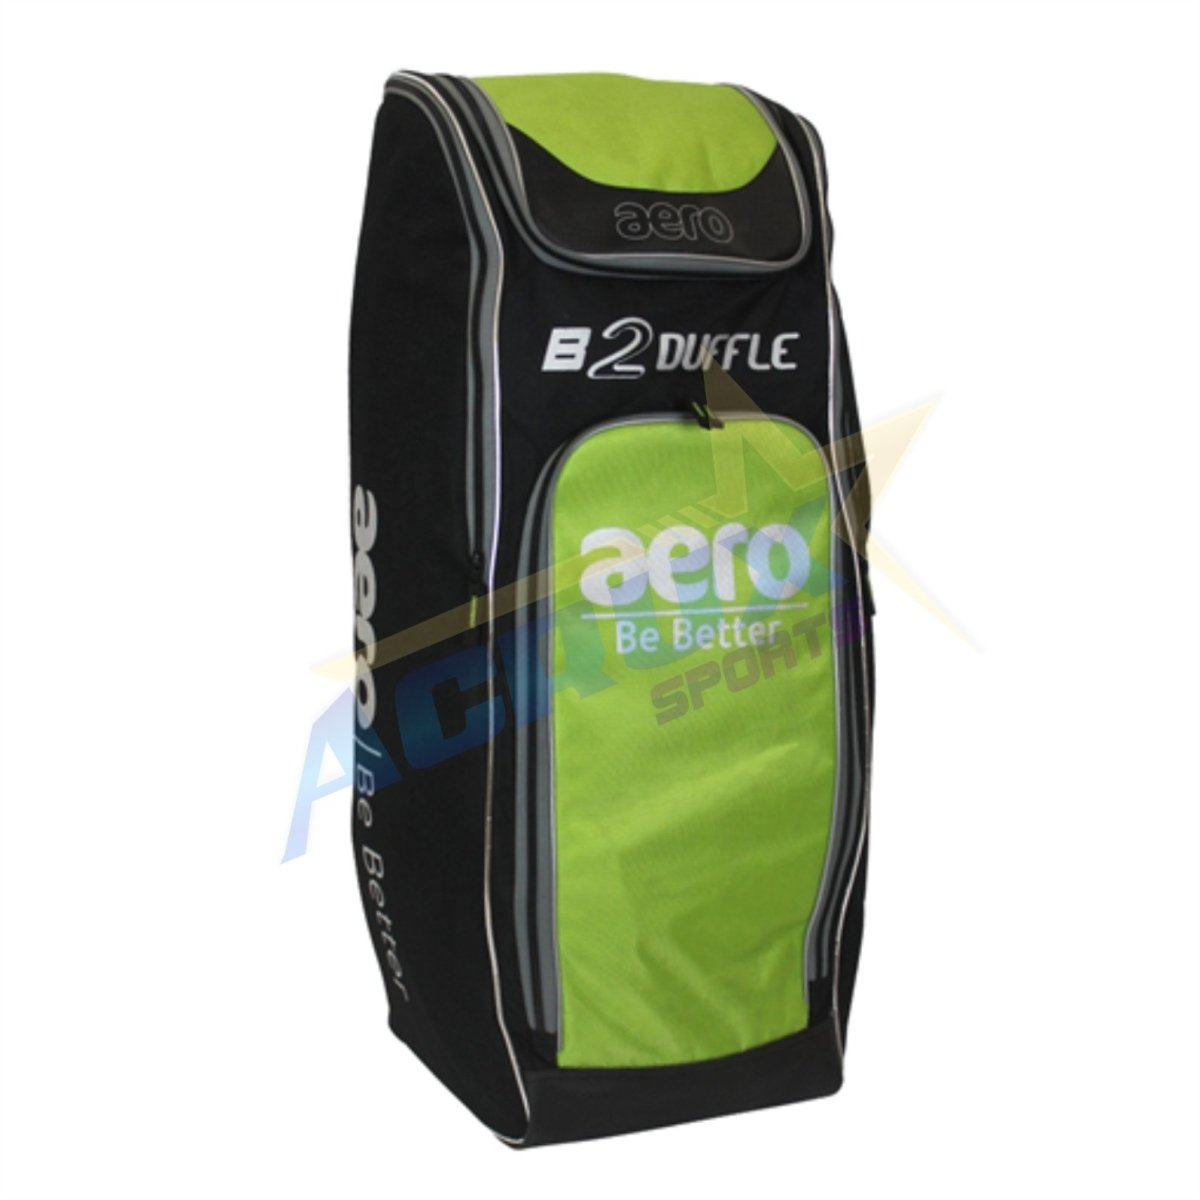 Aero B2 Midi Duffle Cricket Kit Bag.